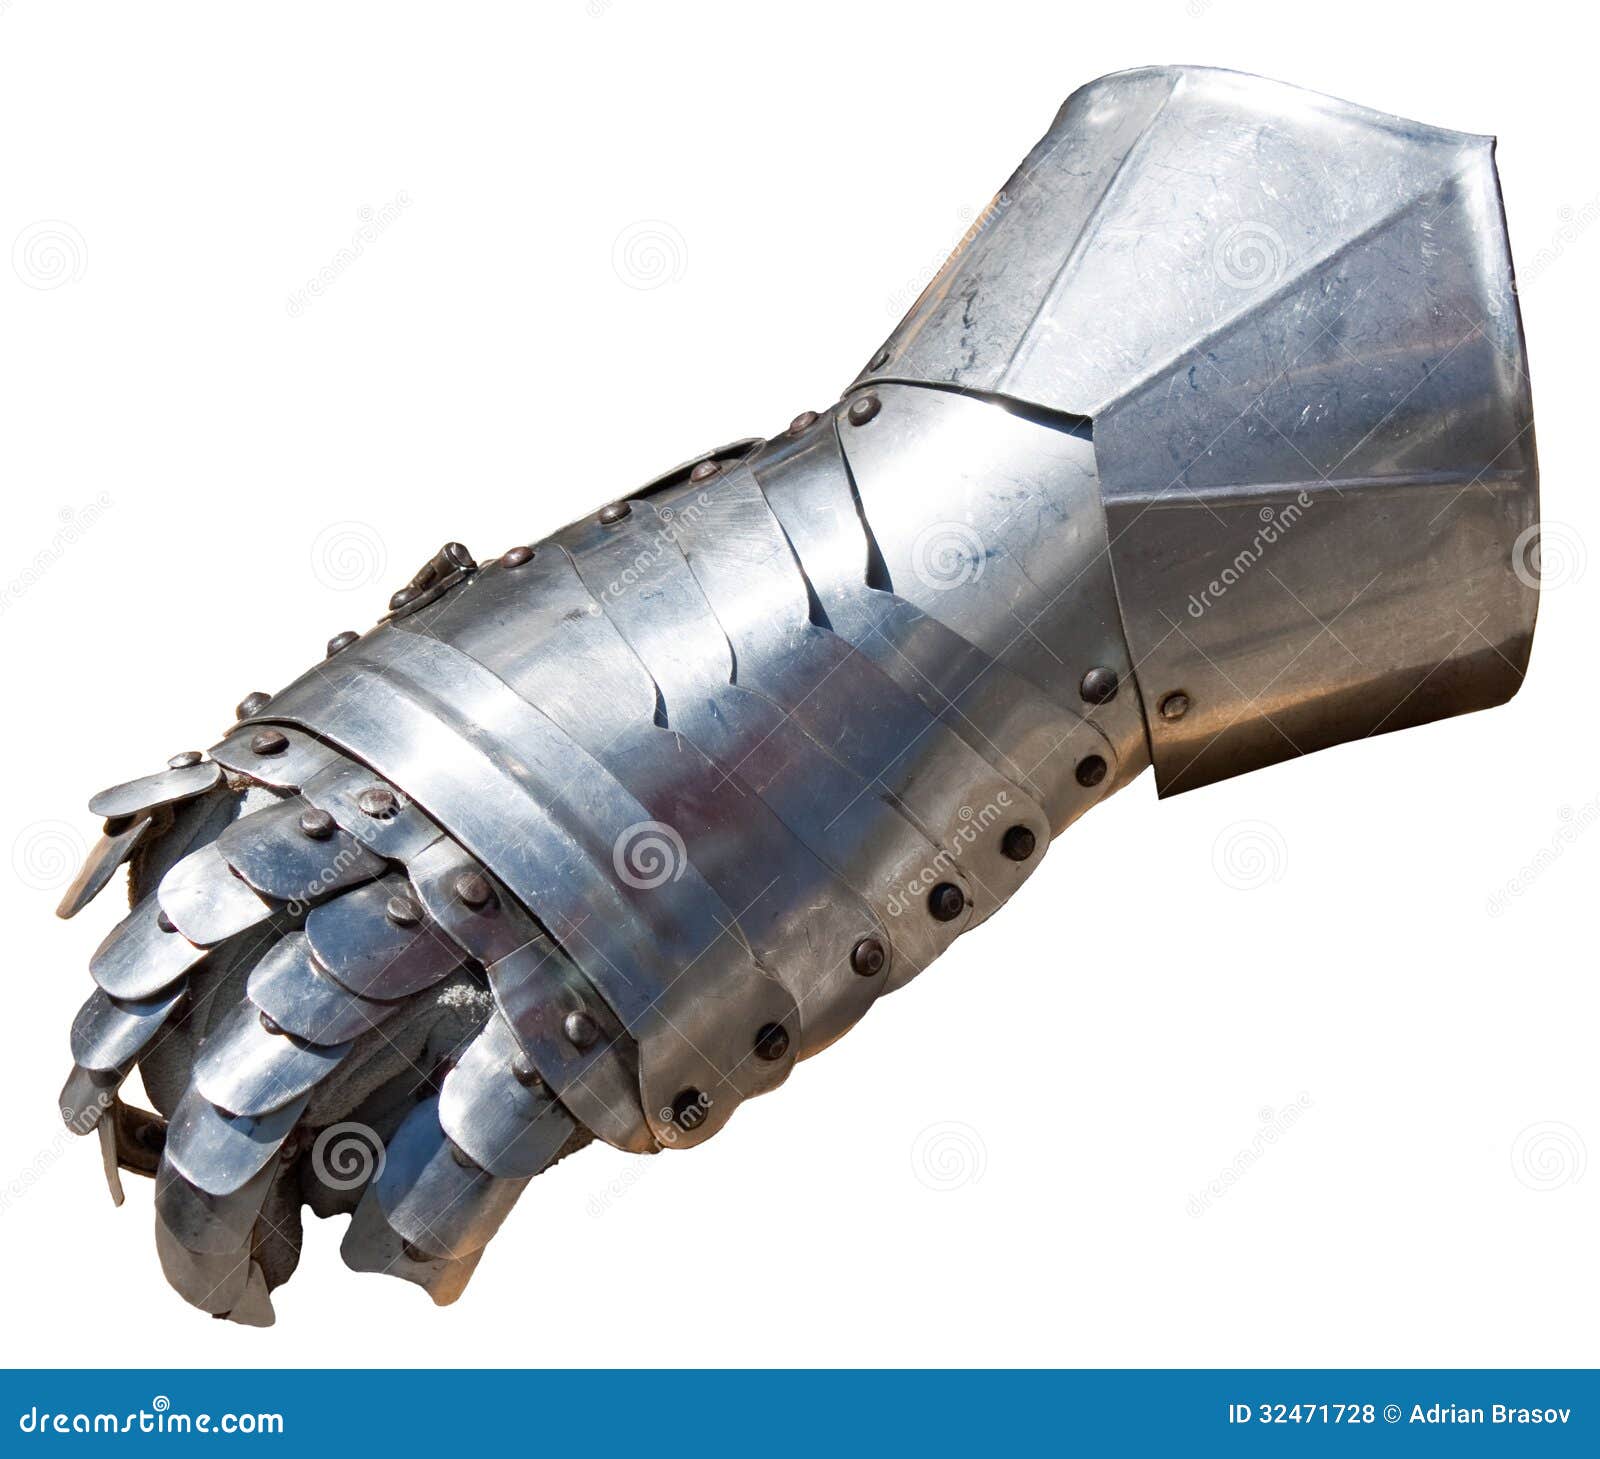 metal-glove-small-piece-medieval-armor-32471728.jpg